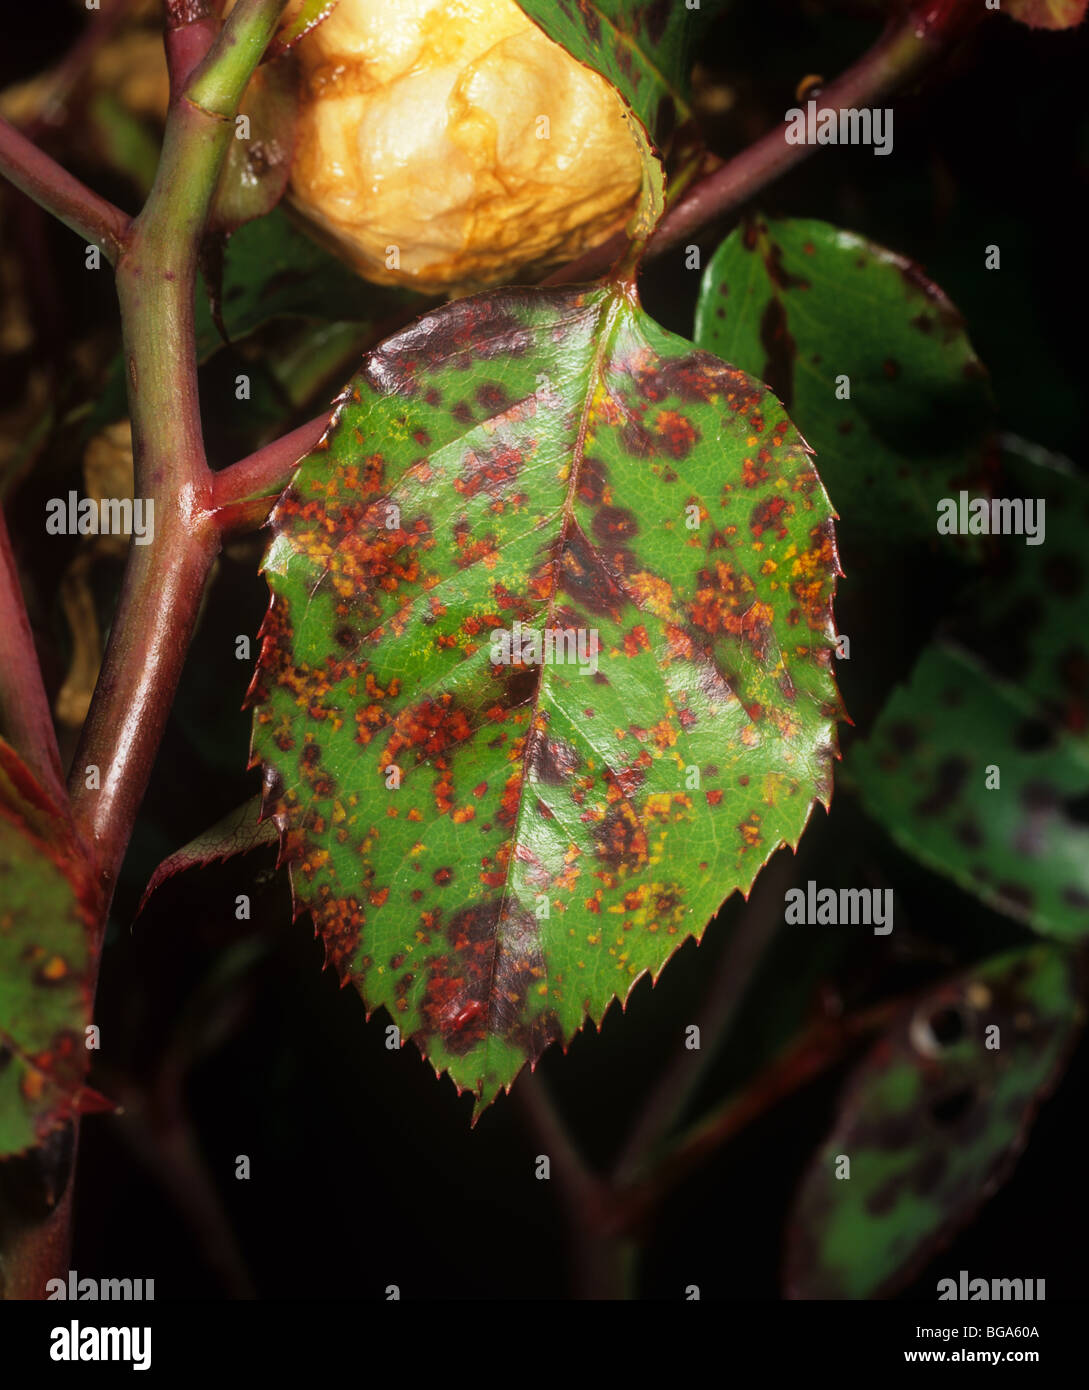 Rose rust (Phragmidium tuberculatum) lesions on rose leaf upper surface Stock Photo